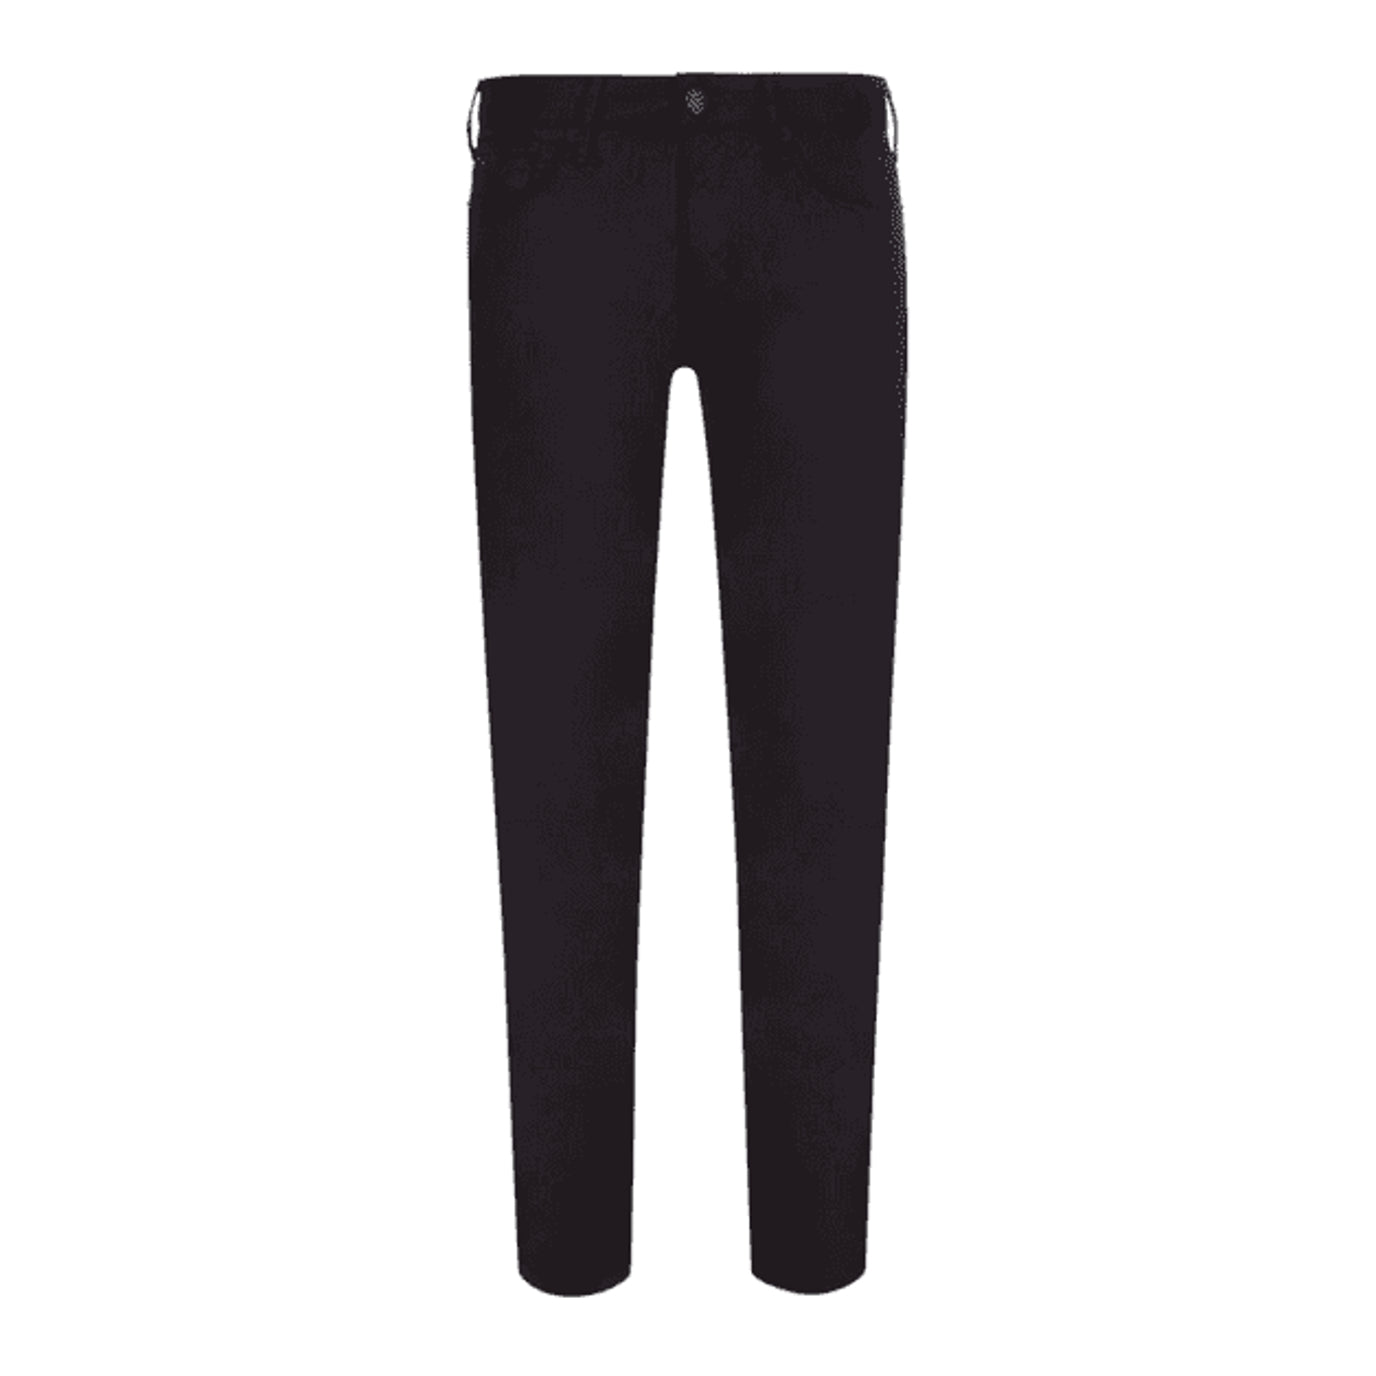 Emporio Armani 8N1J06 1NJ9Z Slim Fit Jeans - 999 Black - Escape Menswear